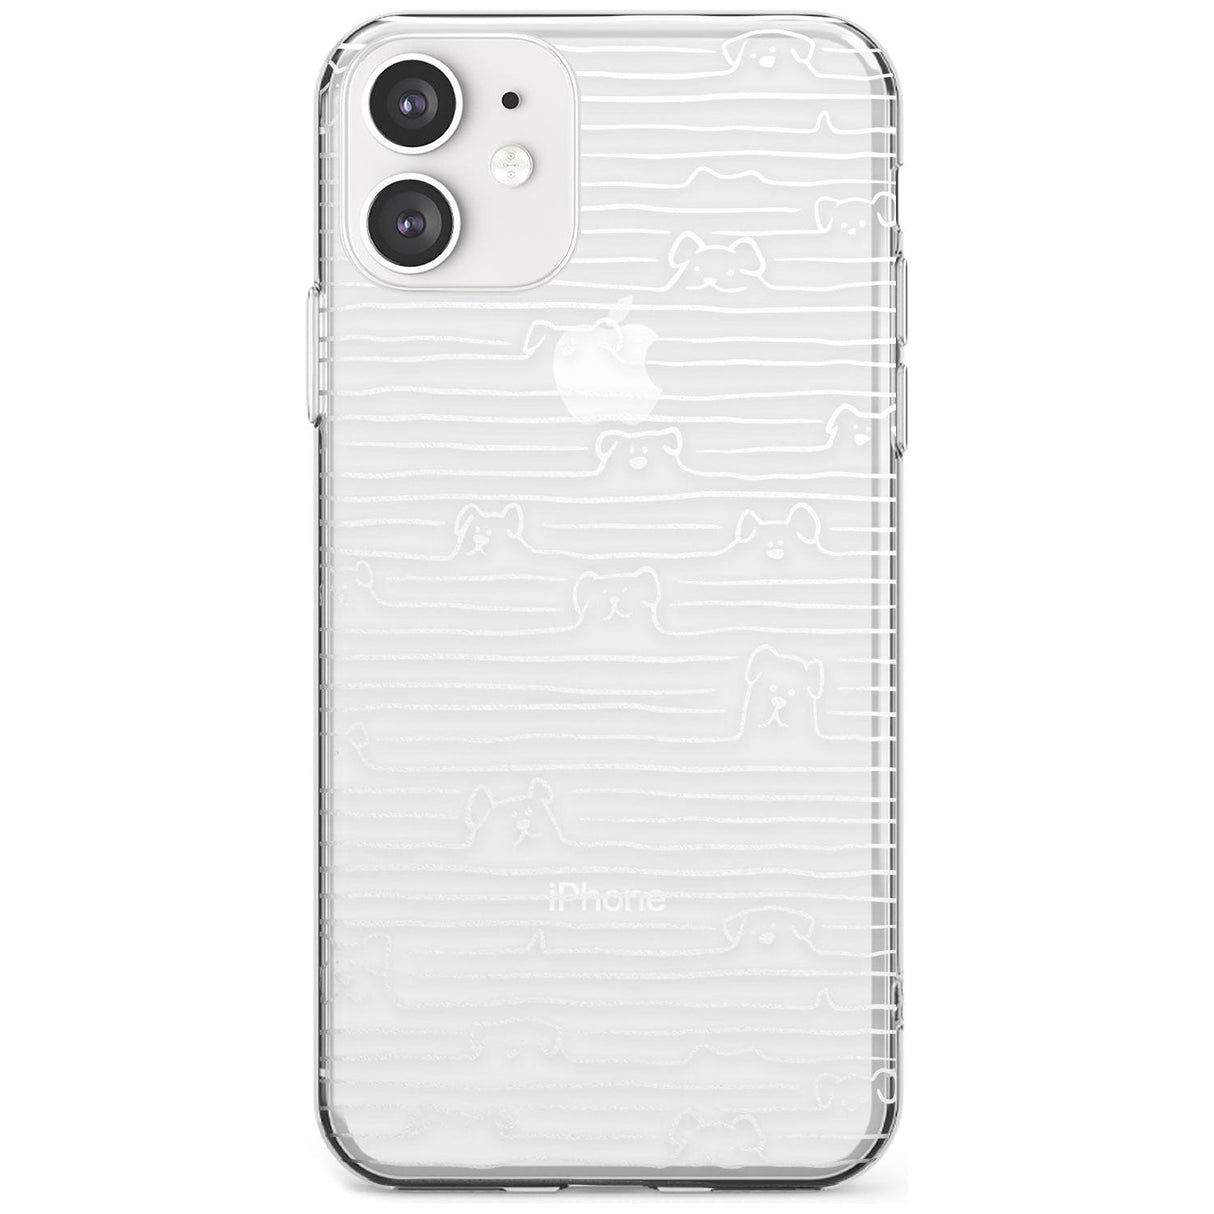 Dog Line Art - White Slim TPU Phone Case for iPhone 11